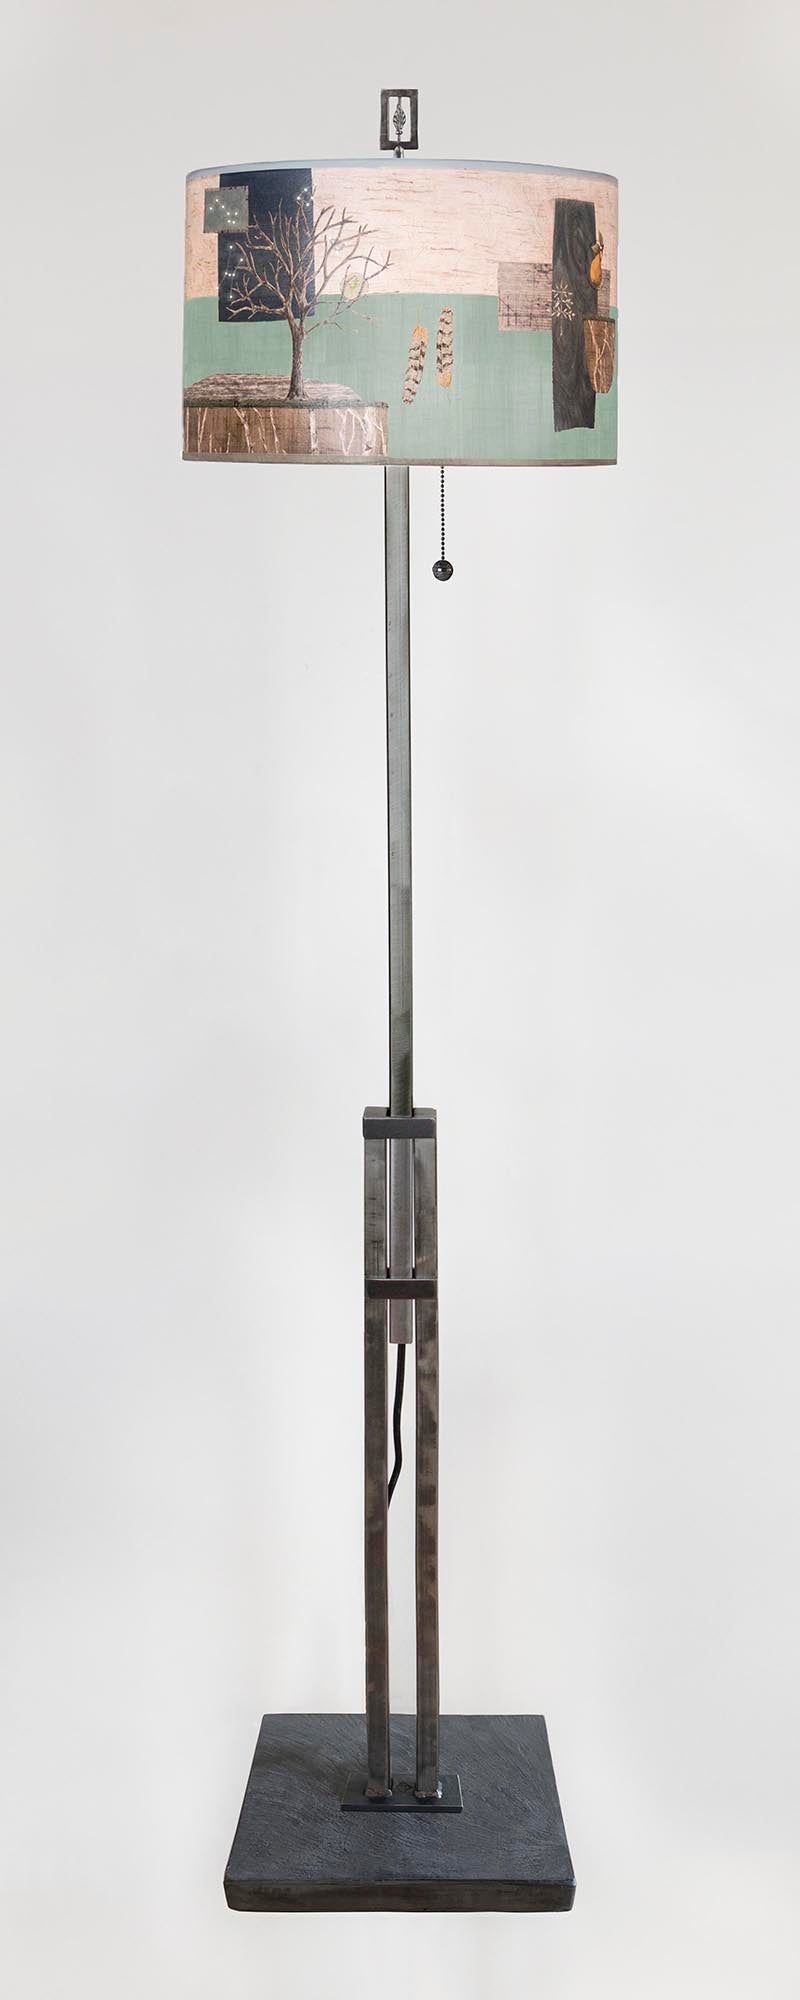 Janna Ugone &amp; Co Floor Lamps Adjustable-Height Steel Floor Lamp with Large Drum Shade in Wander in Field